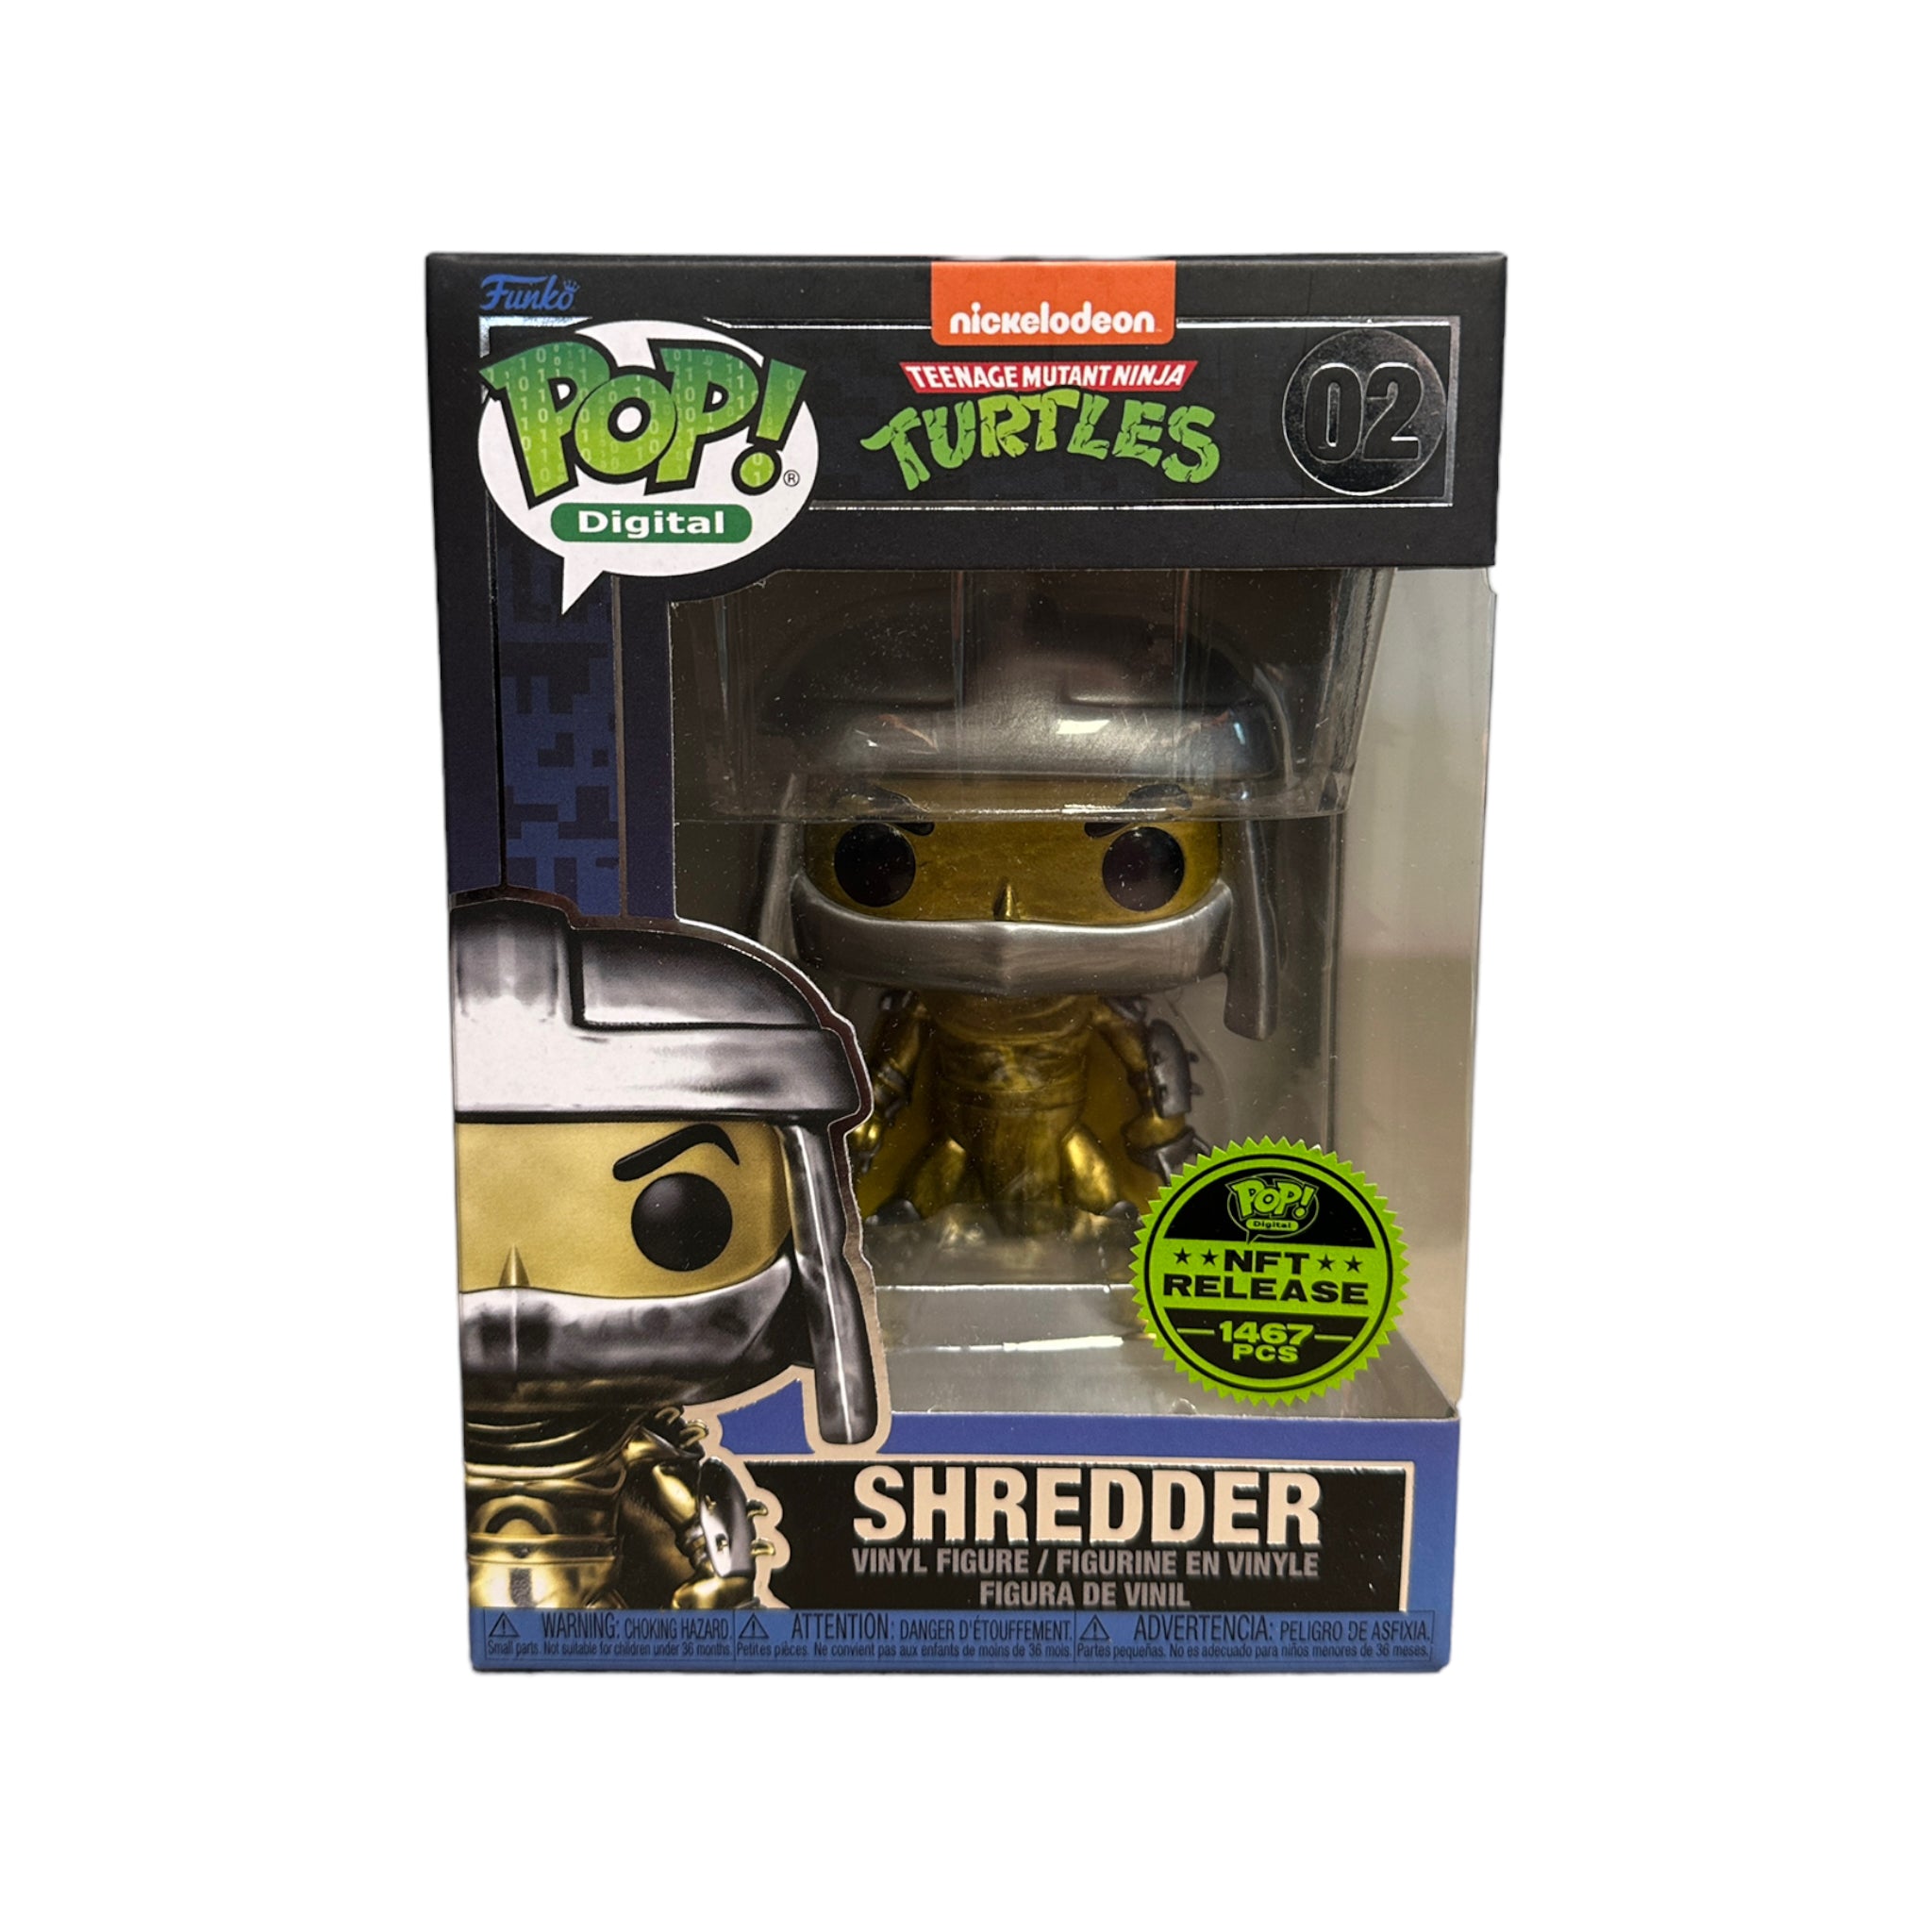 Shredder #02 Funko Pop! - Teenage Mutant Ninja Turtles - NFT Release Exclusive LE1467 Pcs - Condition 9/10